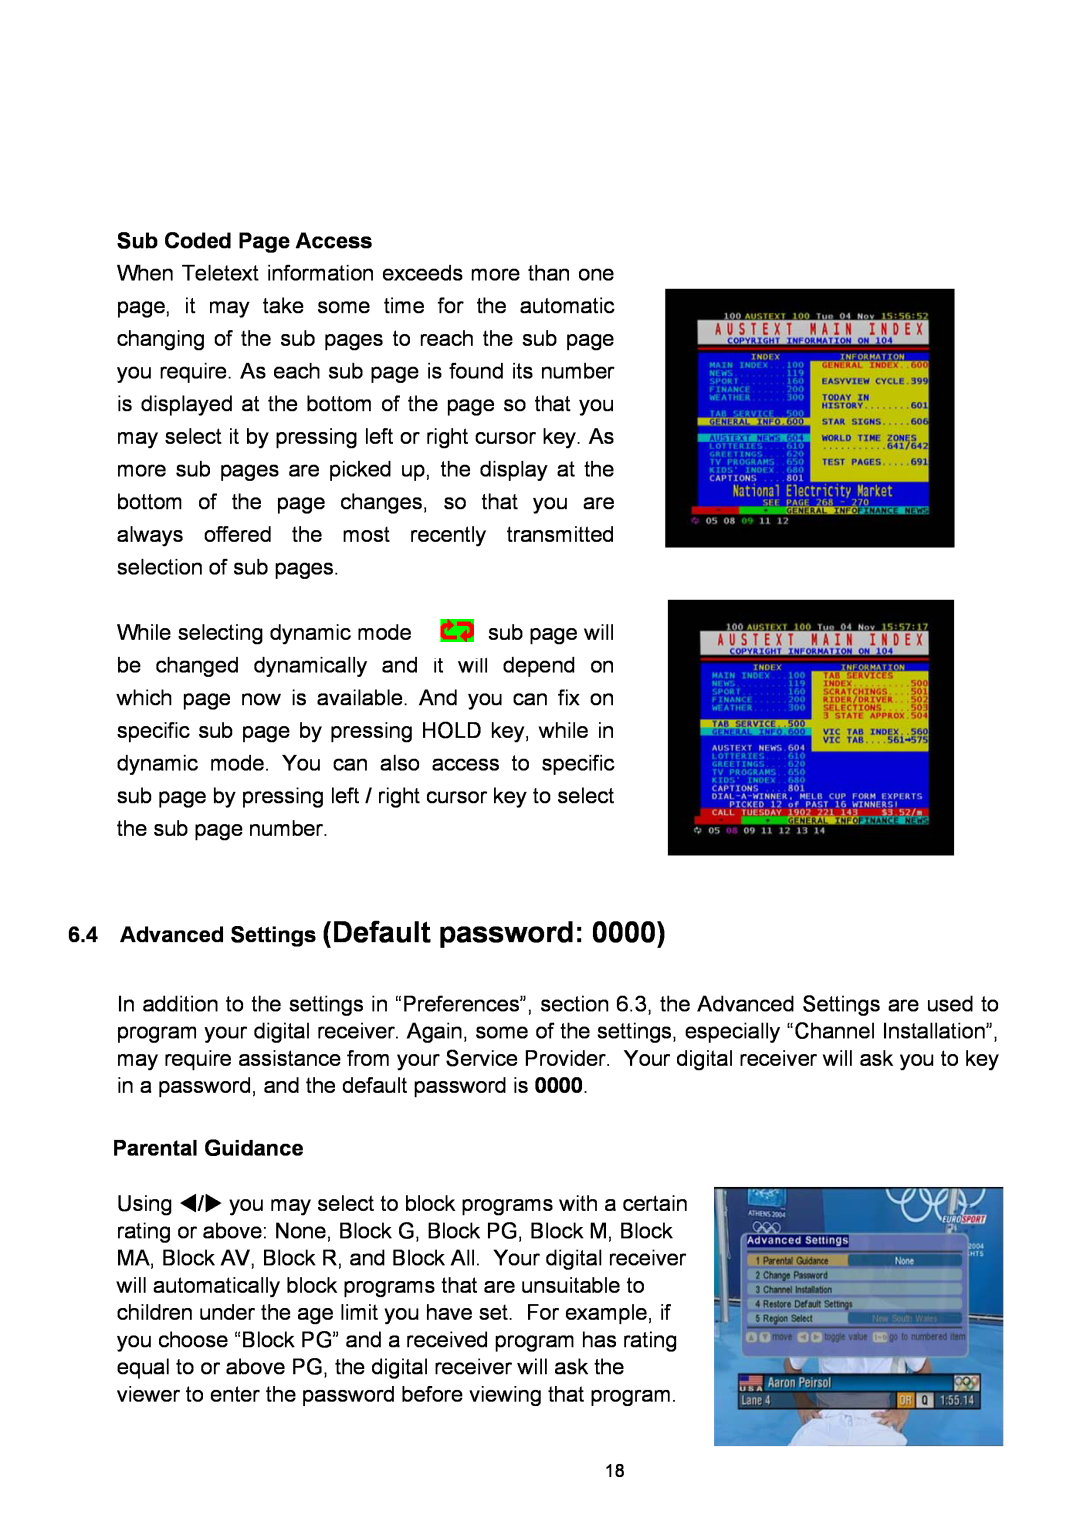 Technicolor - Thomson TU-SZT105A 6.4Advanced Settings Default password, Sub Coded Page Access, Parental Guidance 